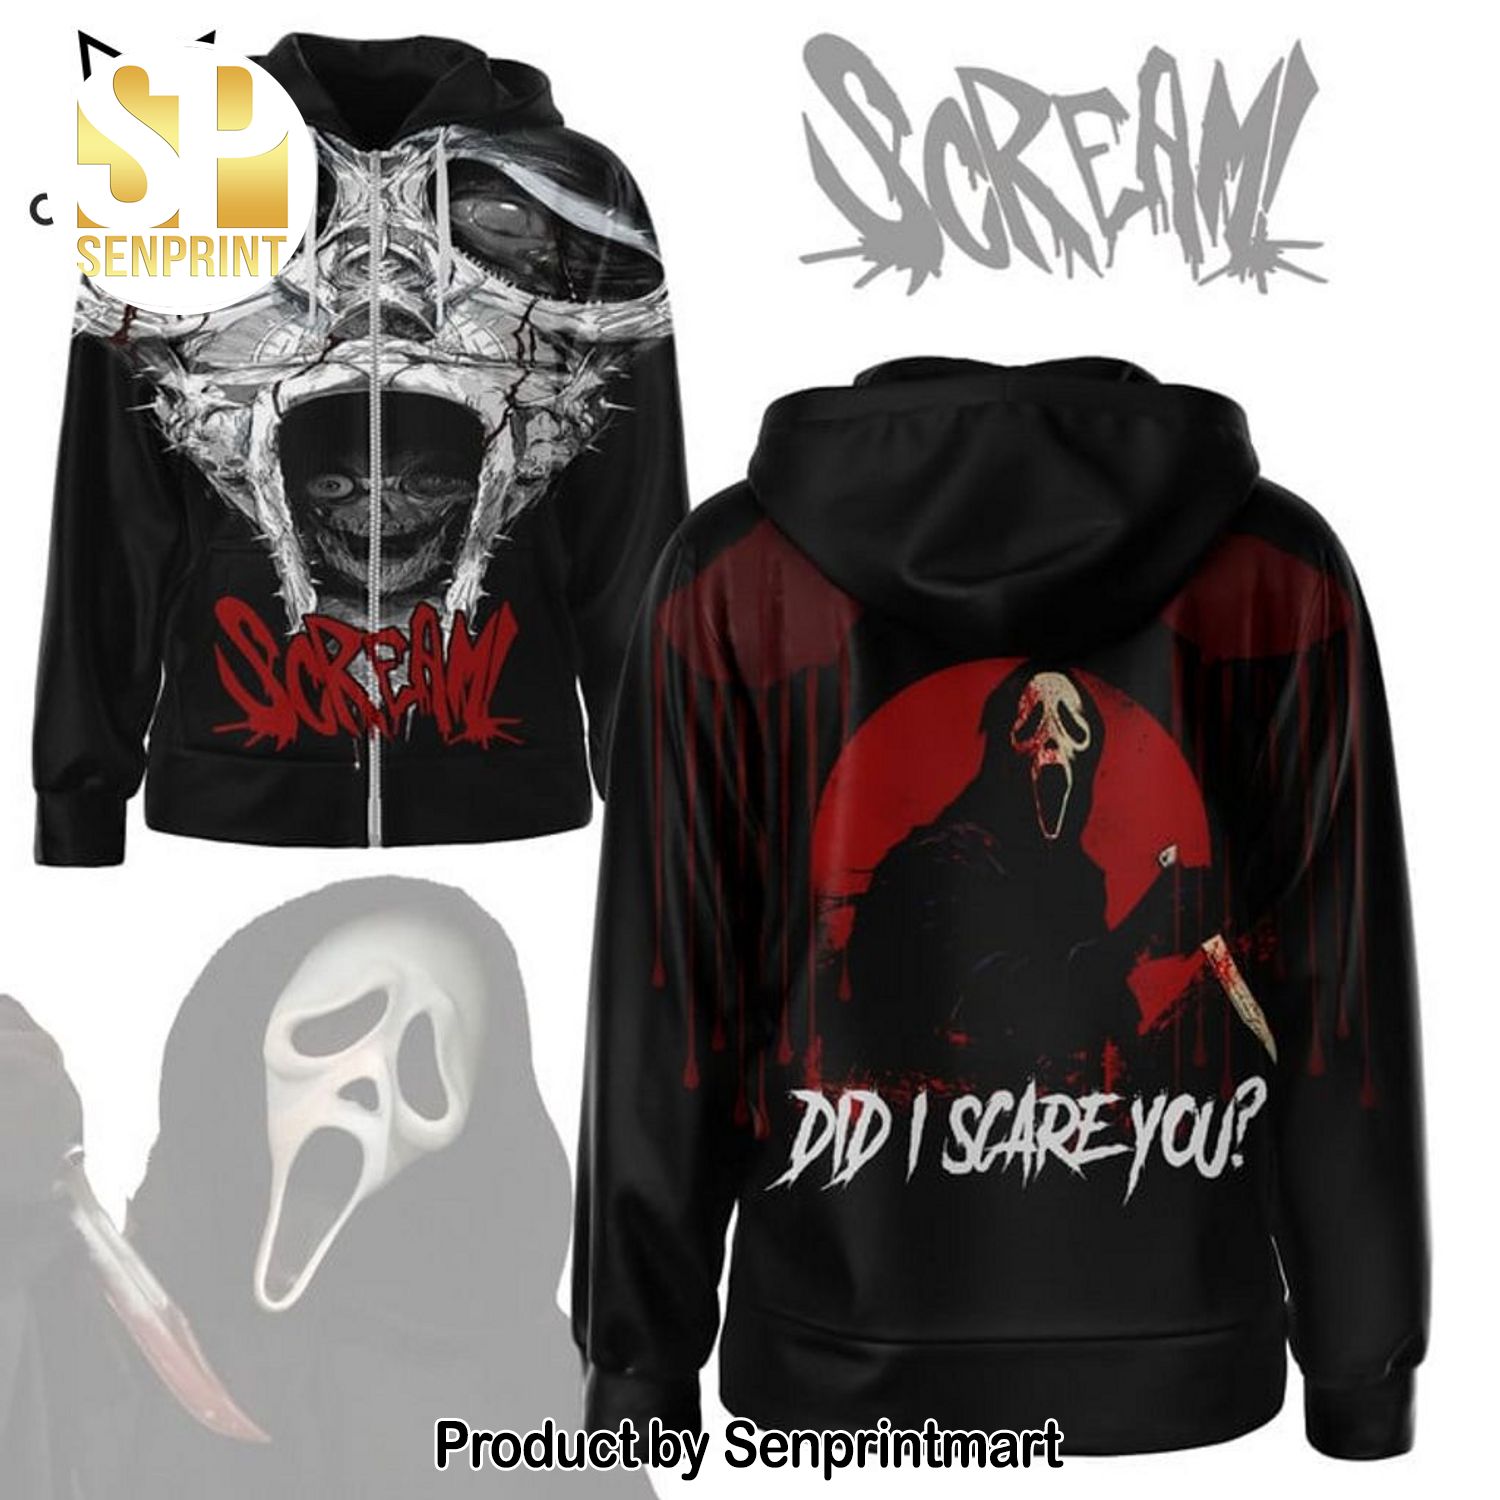 Soream Did I Scare You Skull Design All Over Printed Shirt